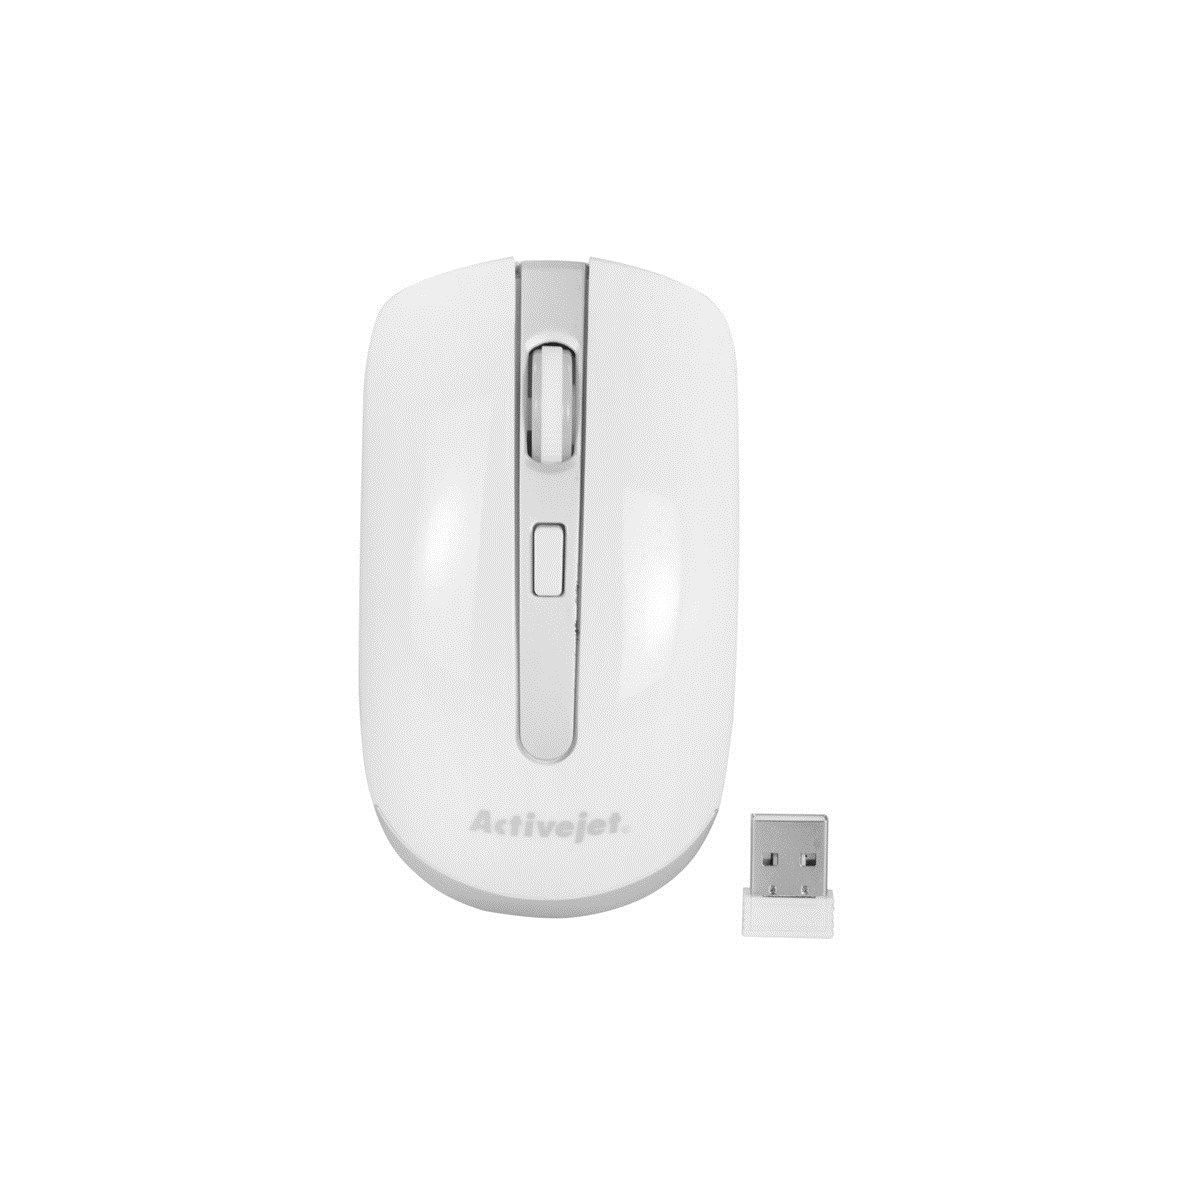 Mysz AMY-320WS biały Activejet (PERACJMYS0022)